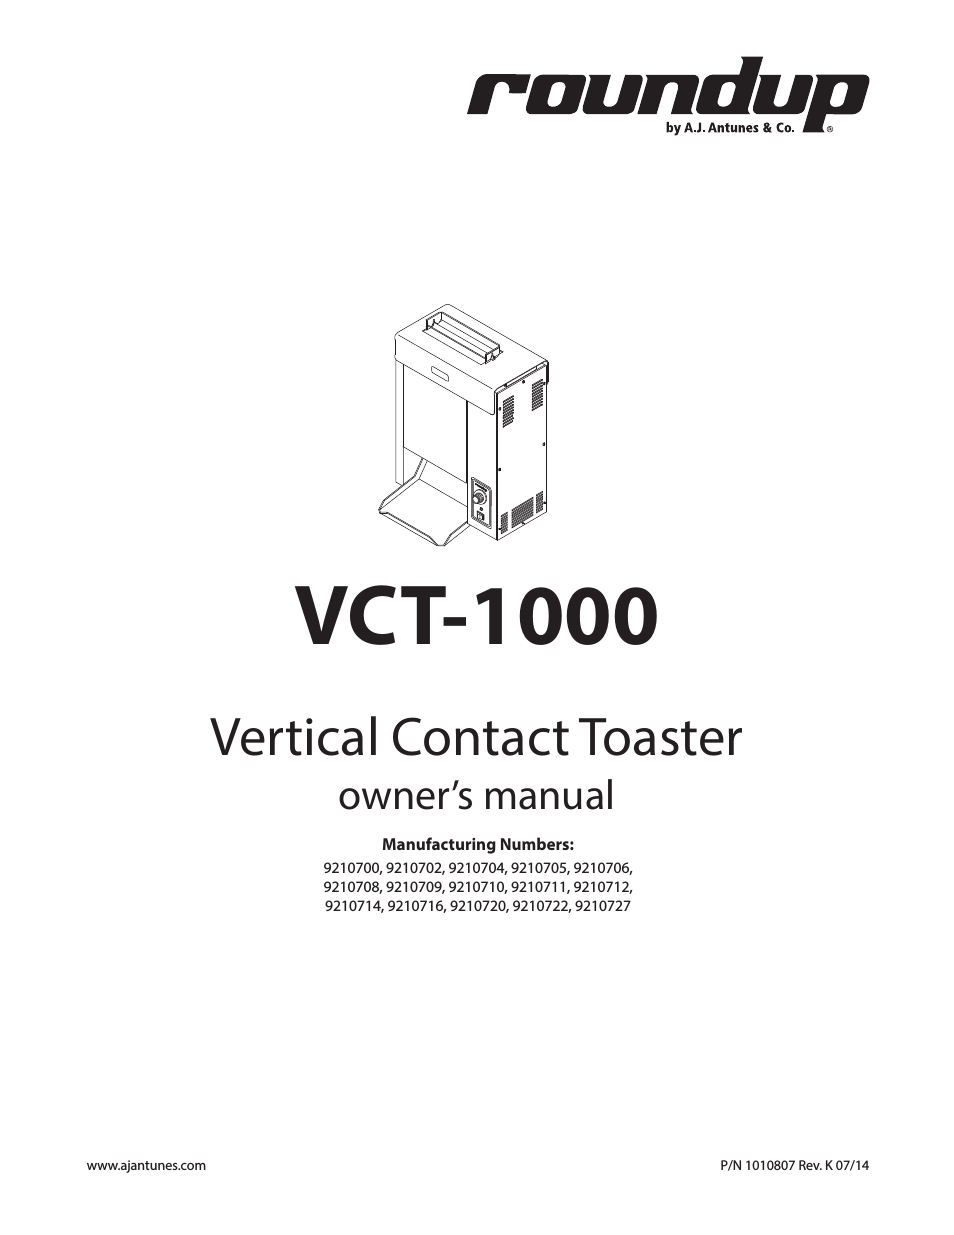 VCT-1000 9210710